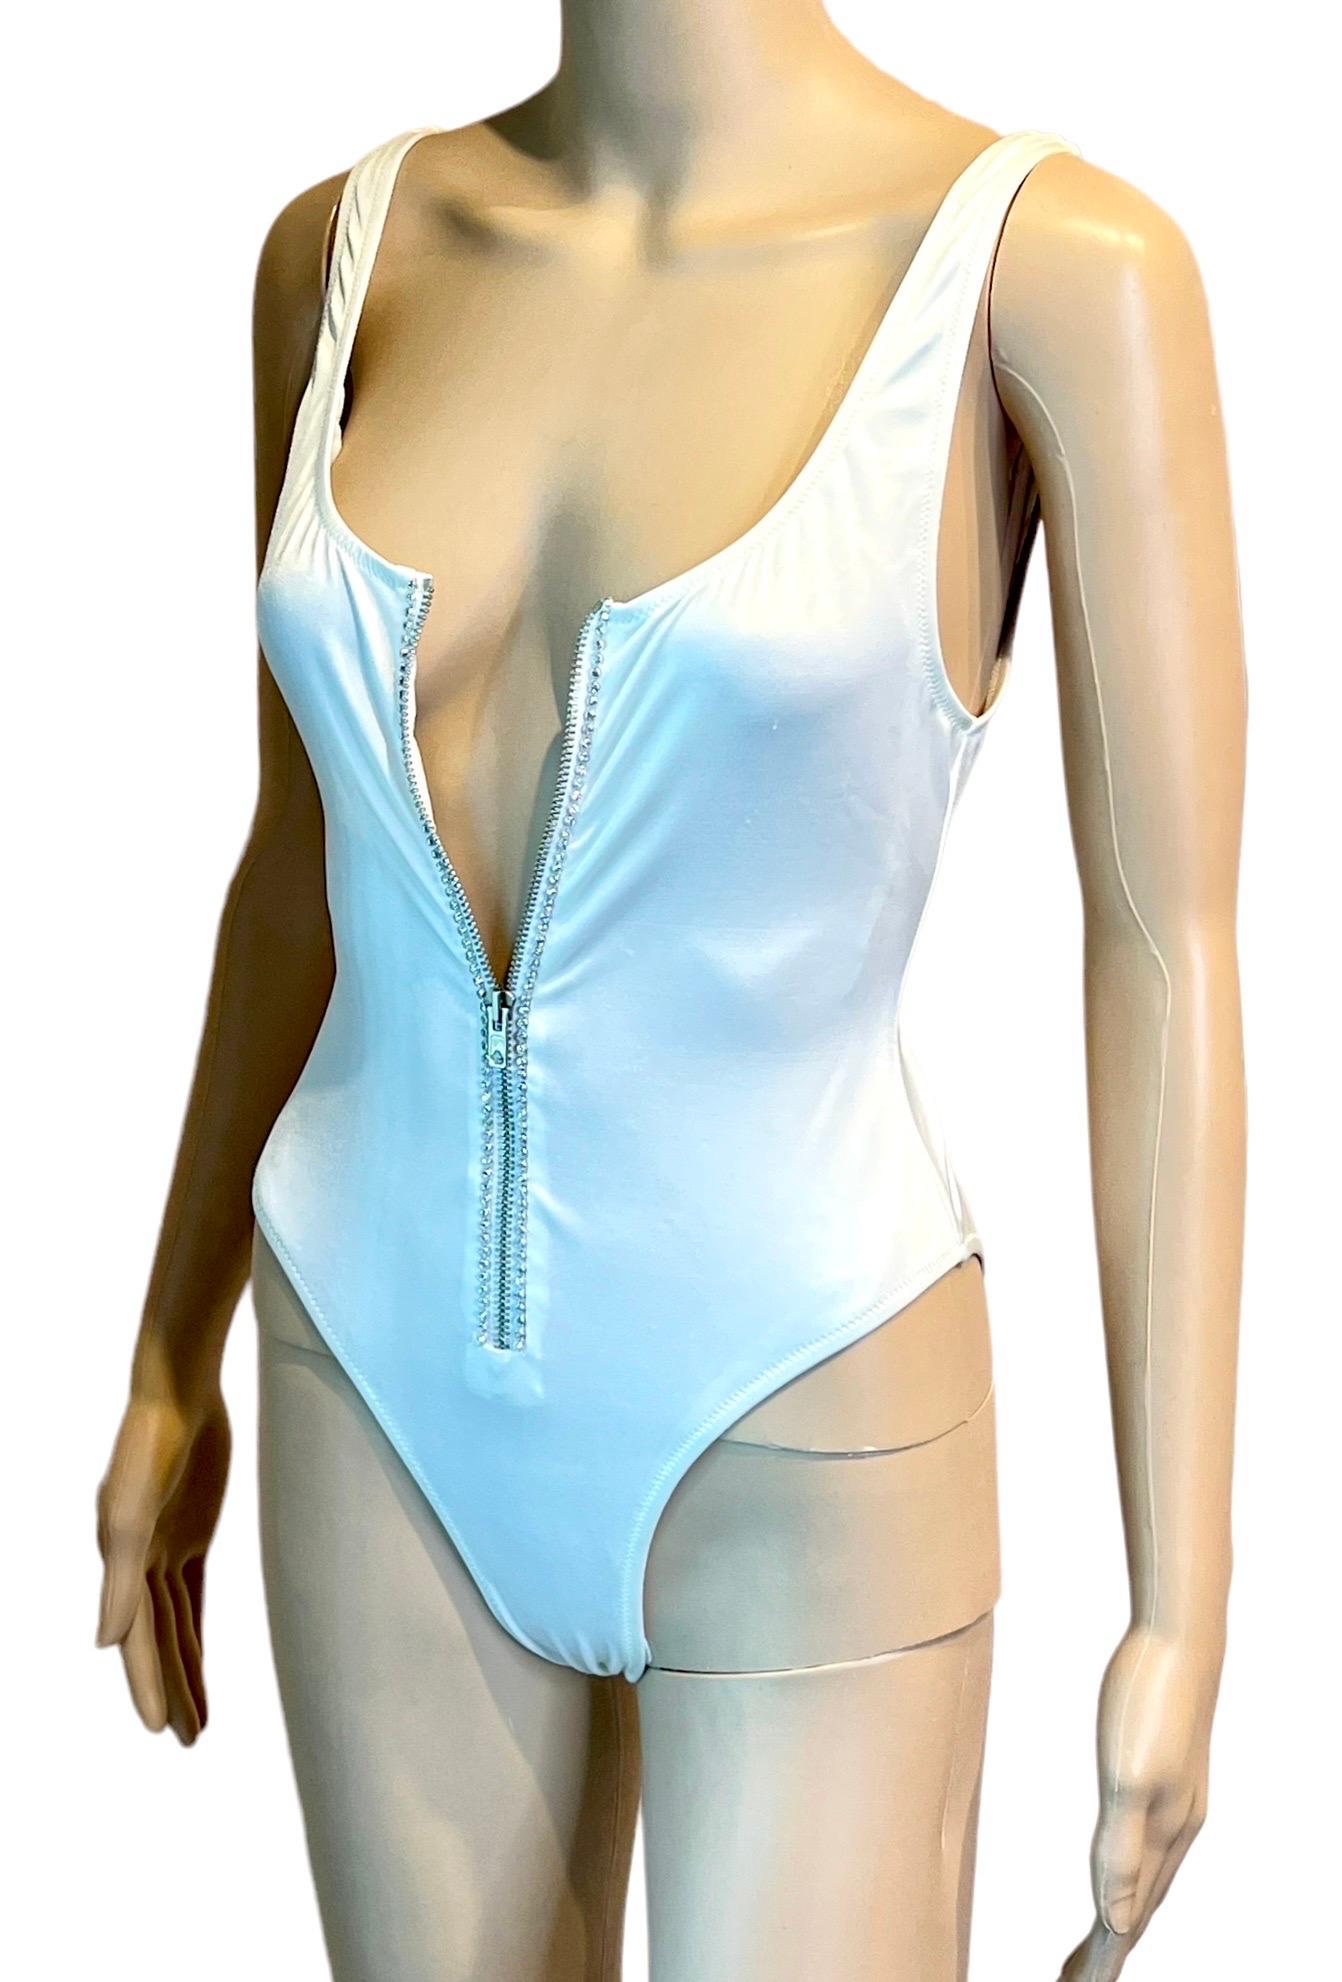 Gianni Versace S/S 1996 Vintage Crystal Zipper White Bodysuit Swimwear Swimsuit For Sale 1